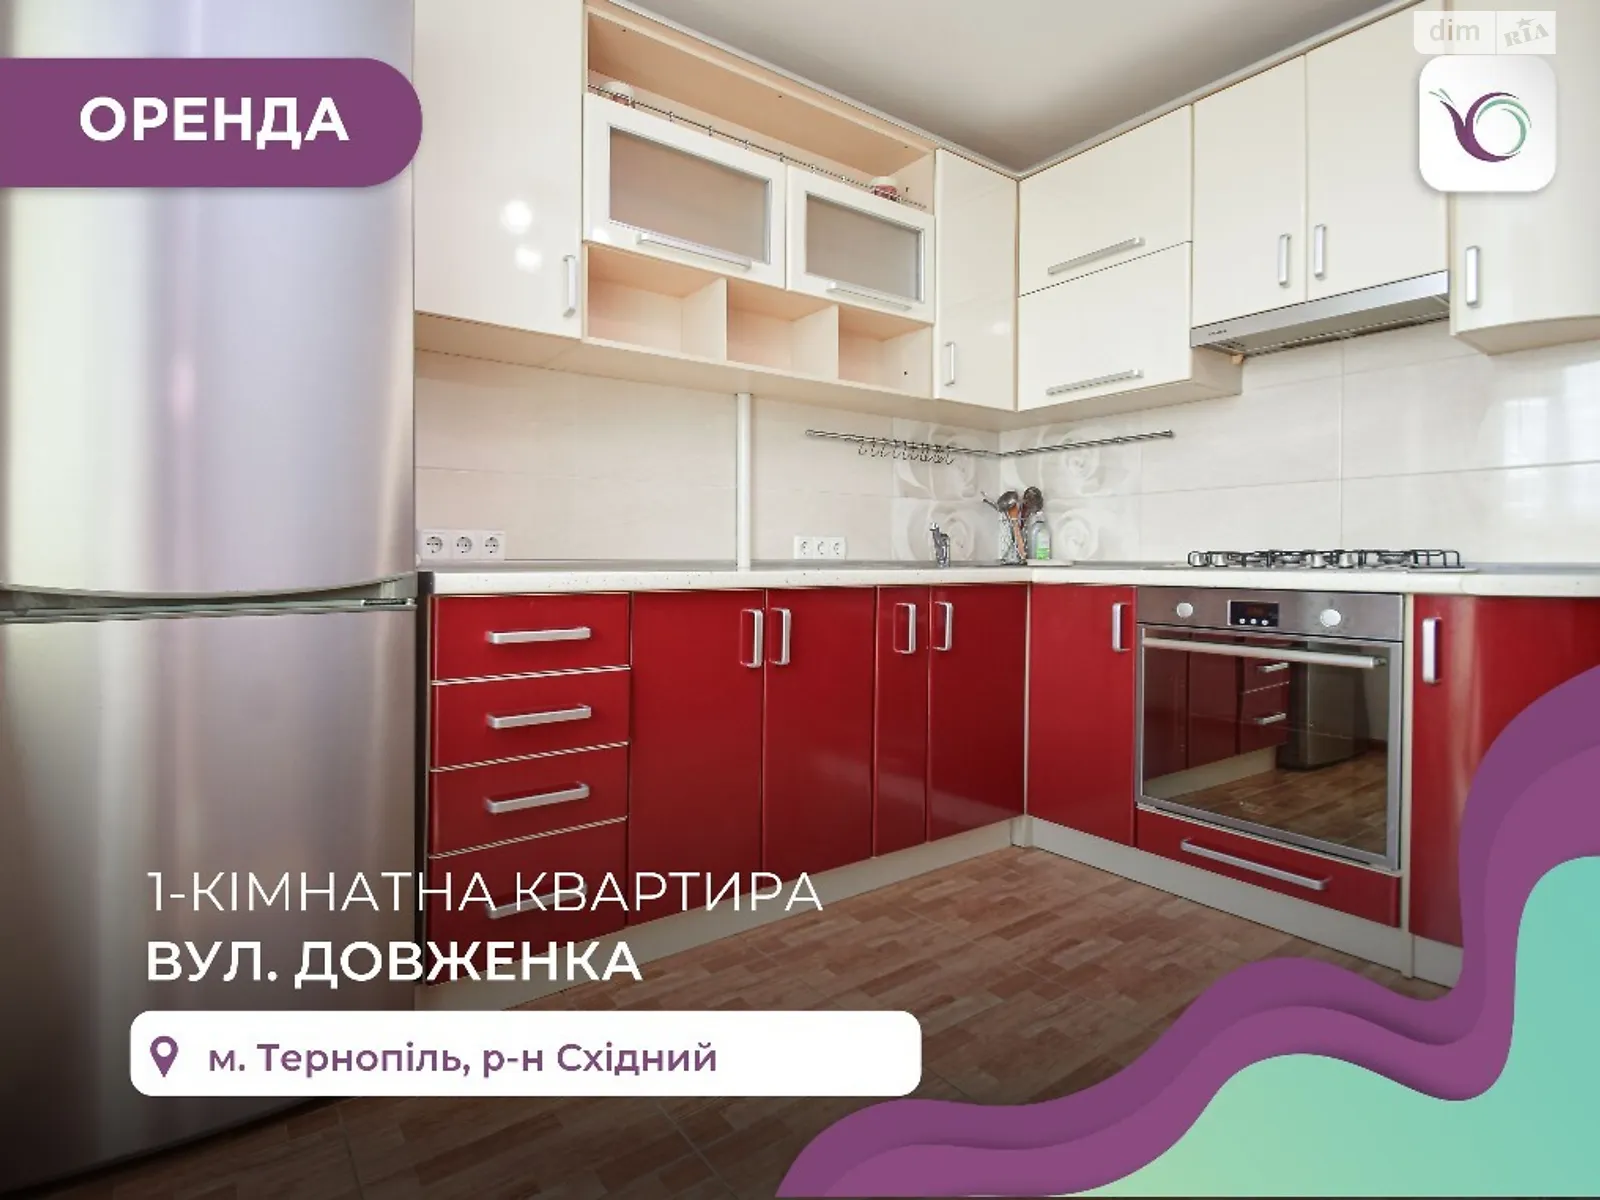 1-кімнатна квартира 45 кв. м у Тернополі, цена: 280 $ - фото 1